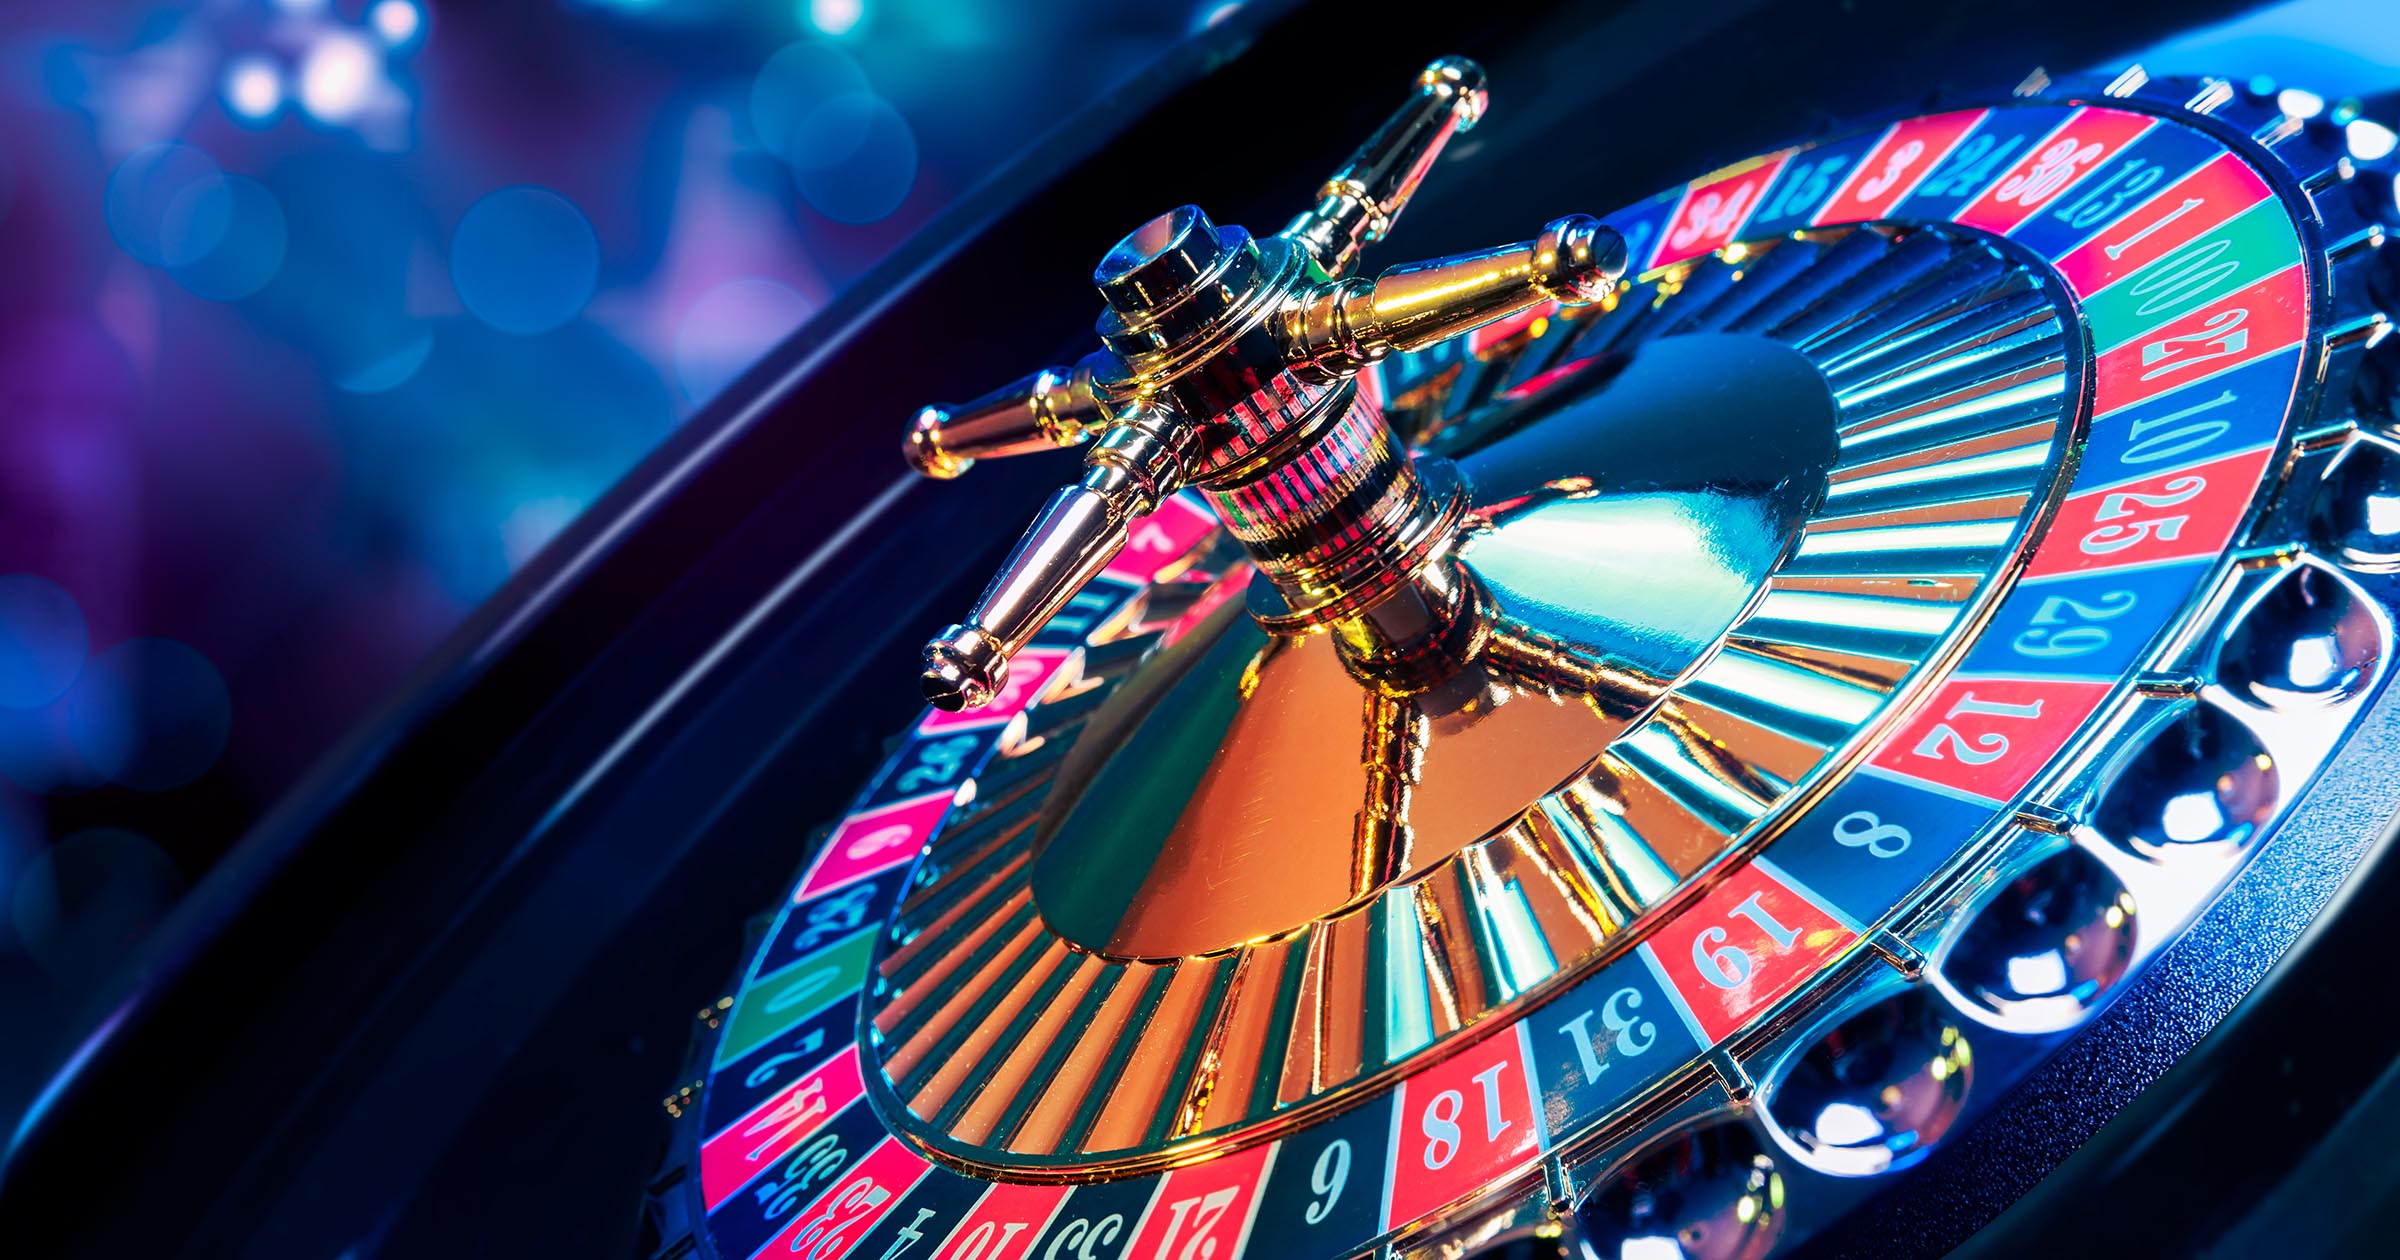 LAS VEGAS GAMBLING: Quick start guide to hitting the casino